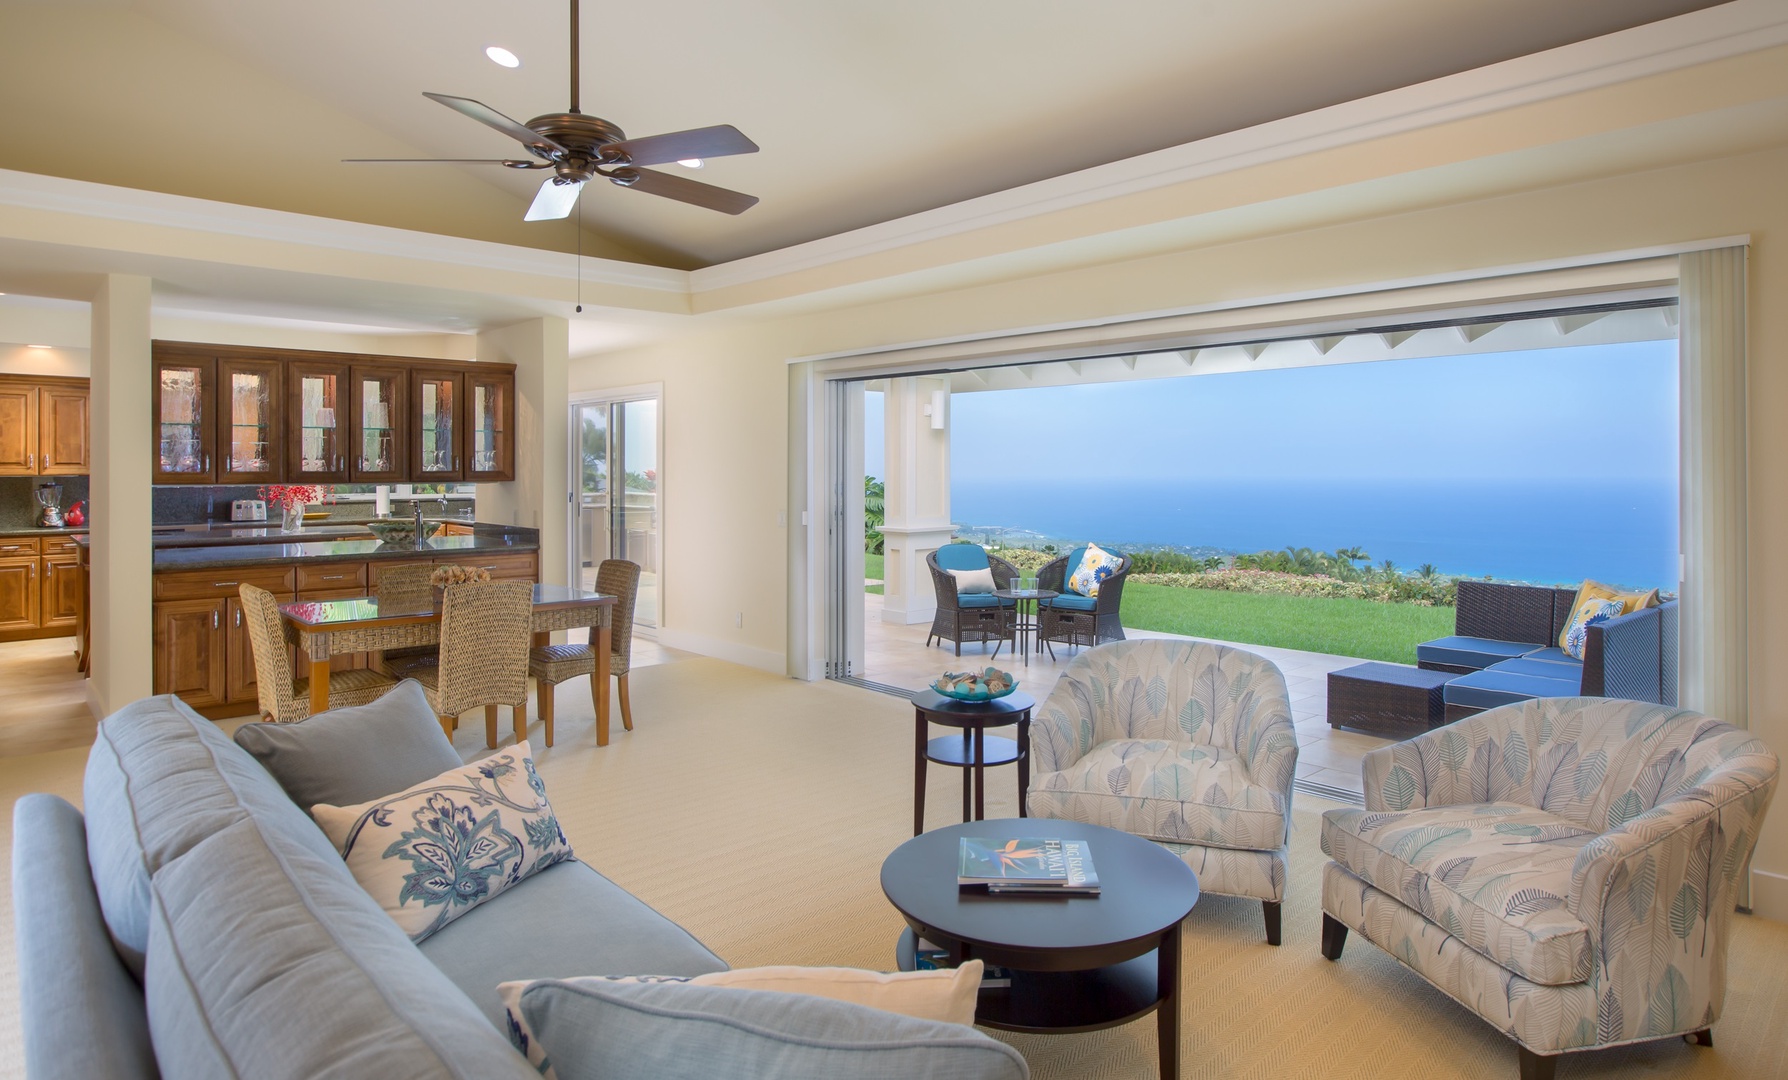 Kailua Kona Vacation Rentals, Hale Maluhia (Big Island) - Open concept living